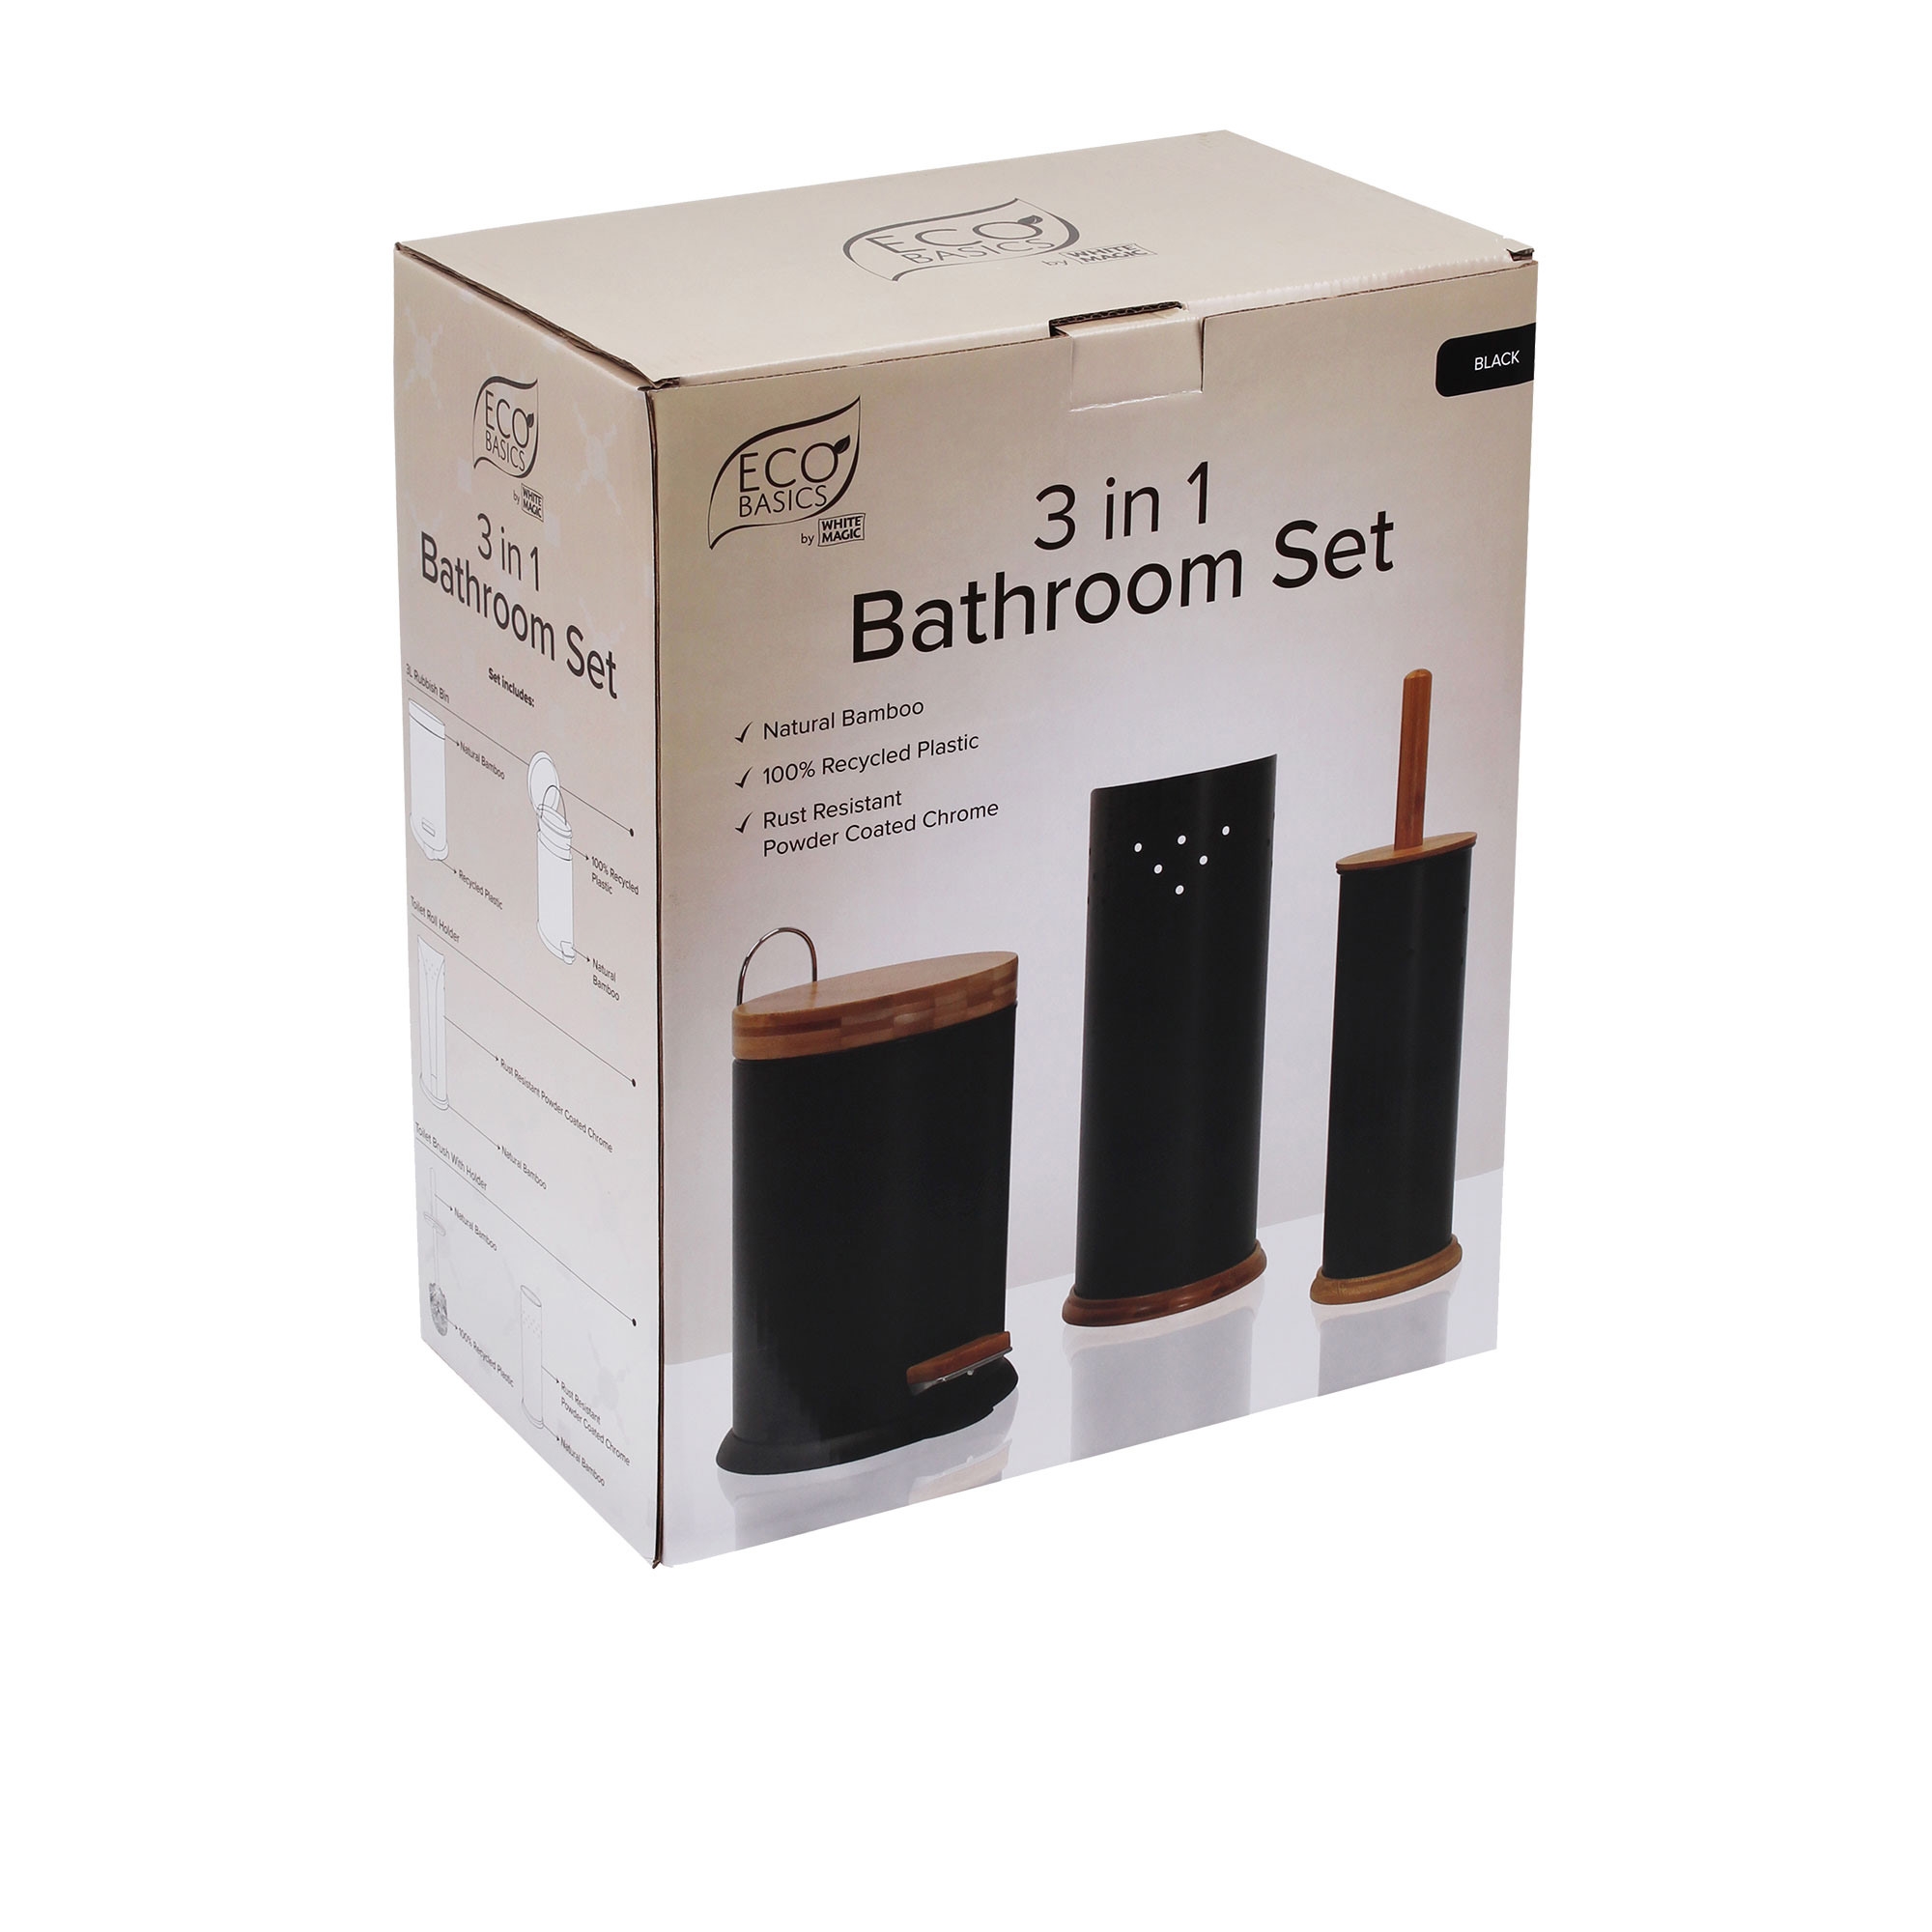 White Magic Eco Basics 3 in 1 Bathroom Set Black Image 2